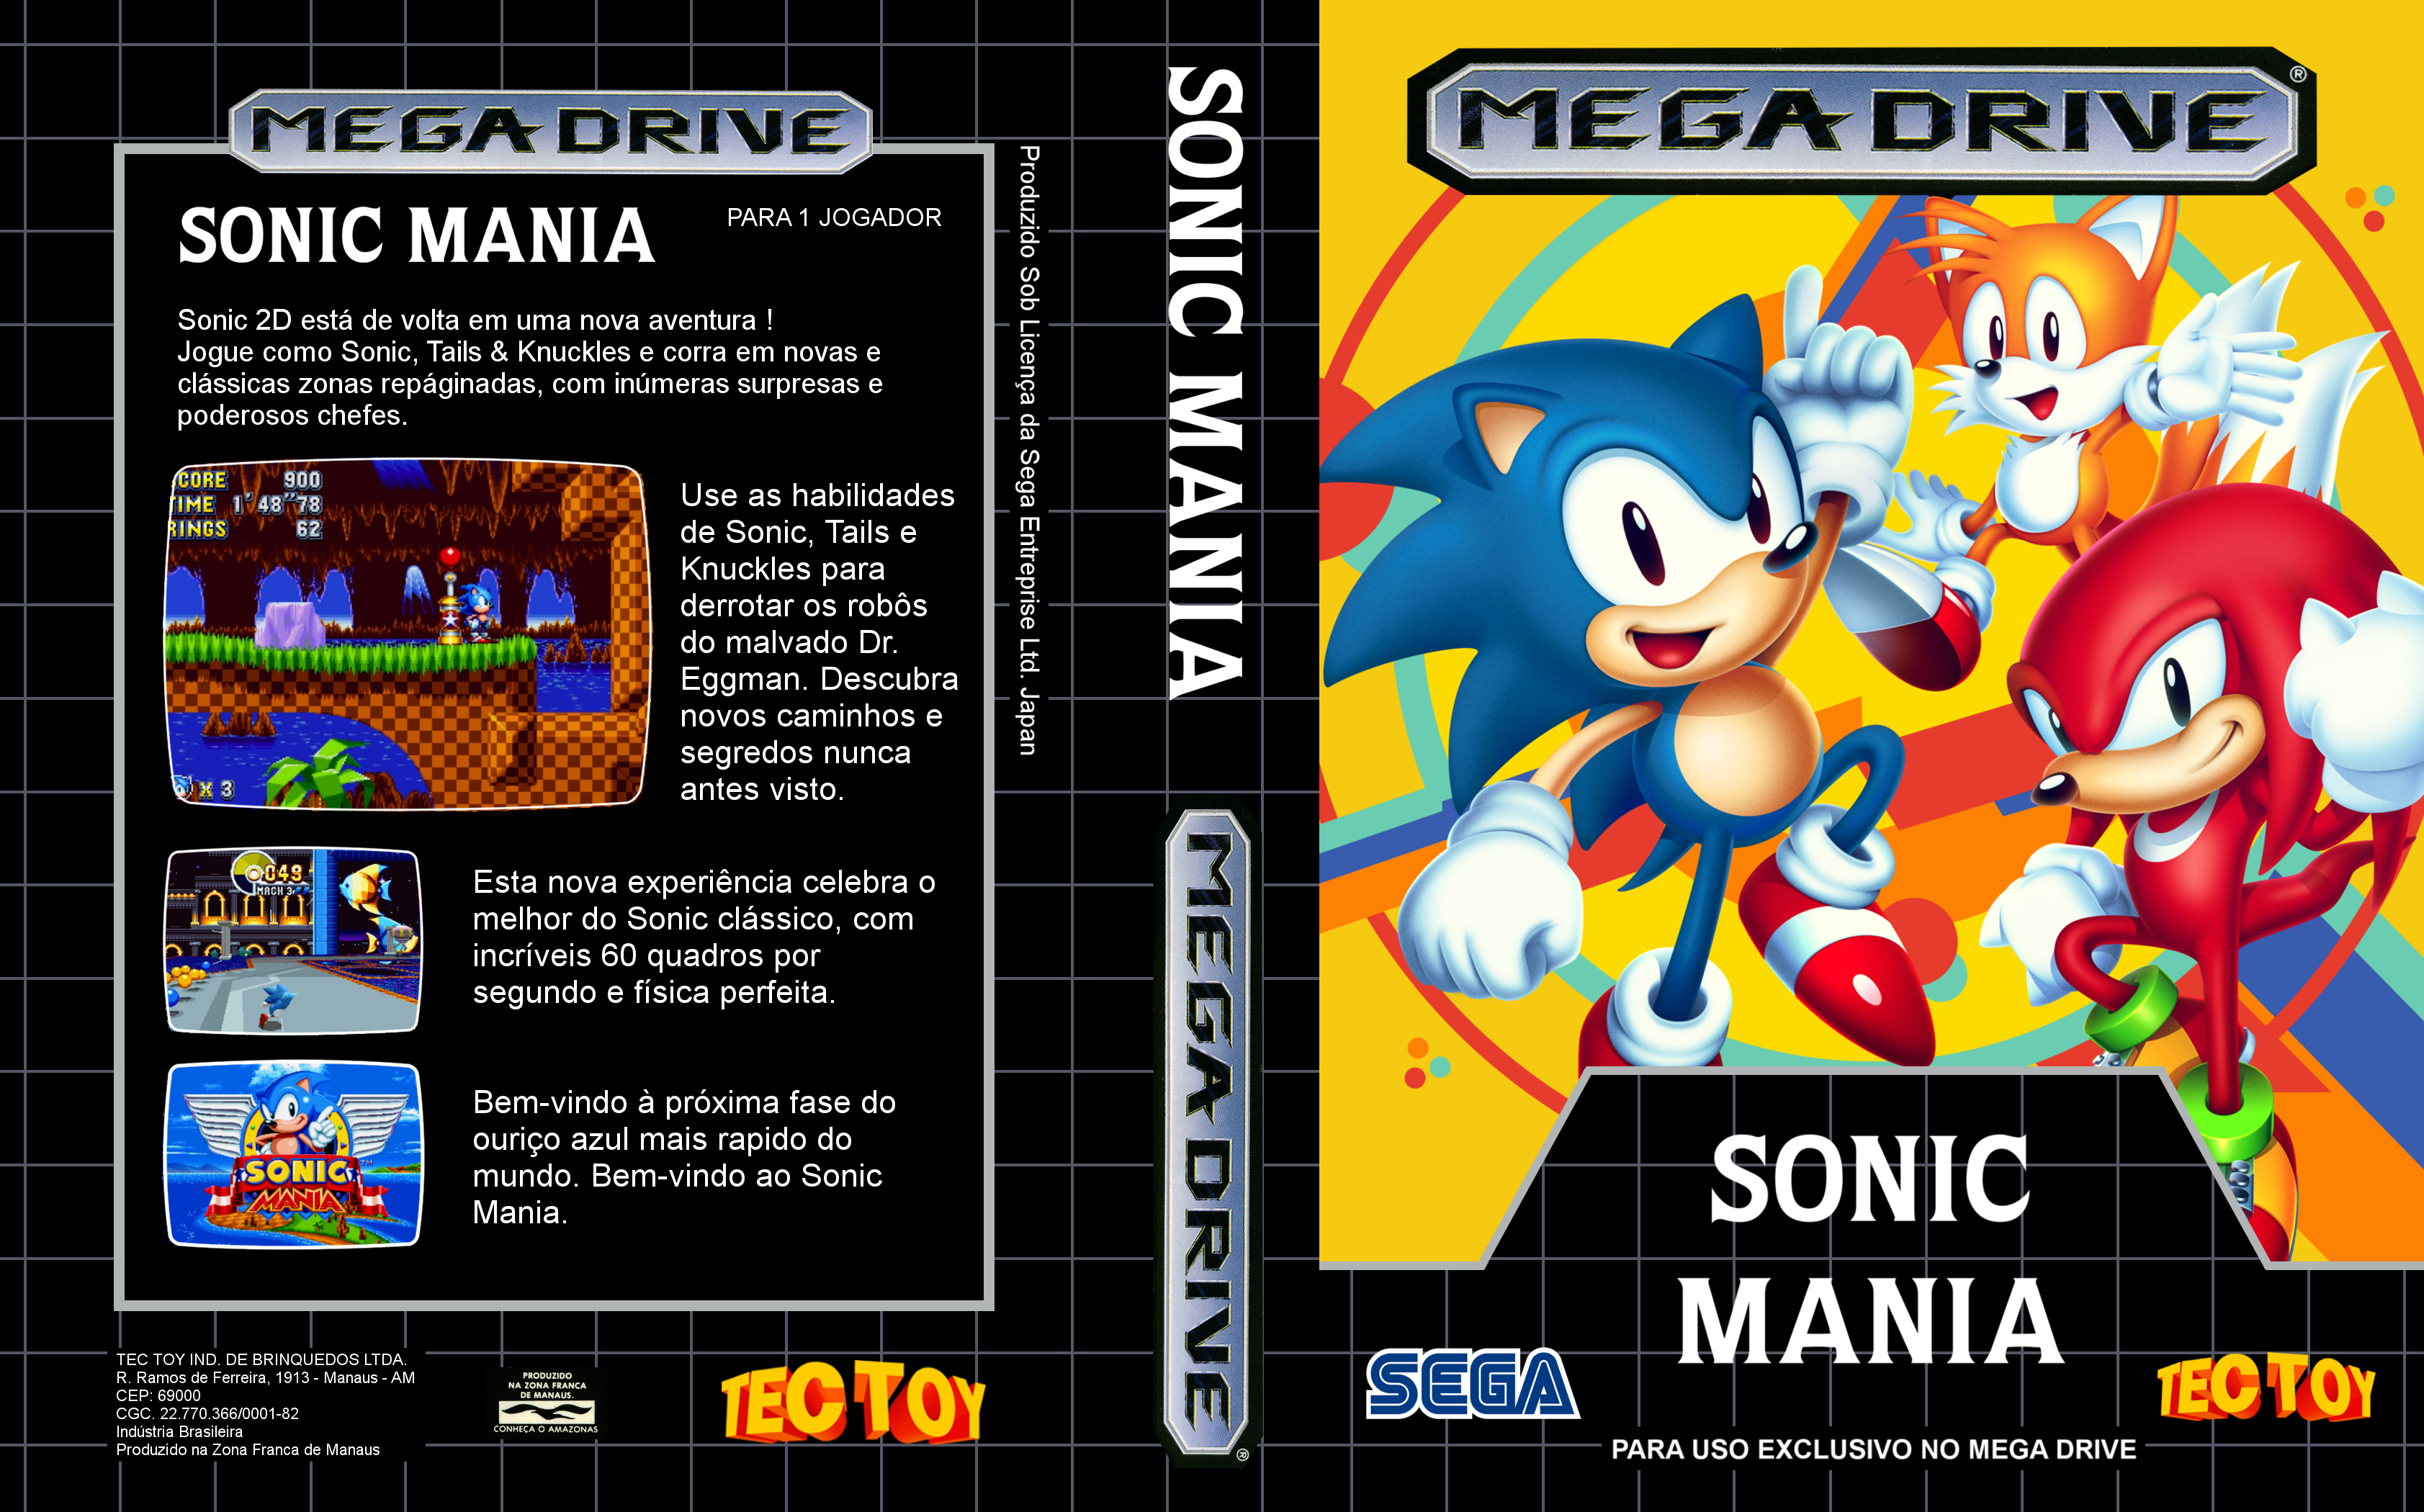 Sonic Mania Plus Mega Drive Cartridge. Sega Genesis Sonic 2 коробка. Sonic Mega Drive обложка. Картридж Соник Мания для приставки Sega. Играть в соник манию